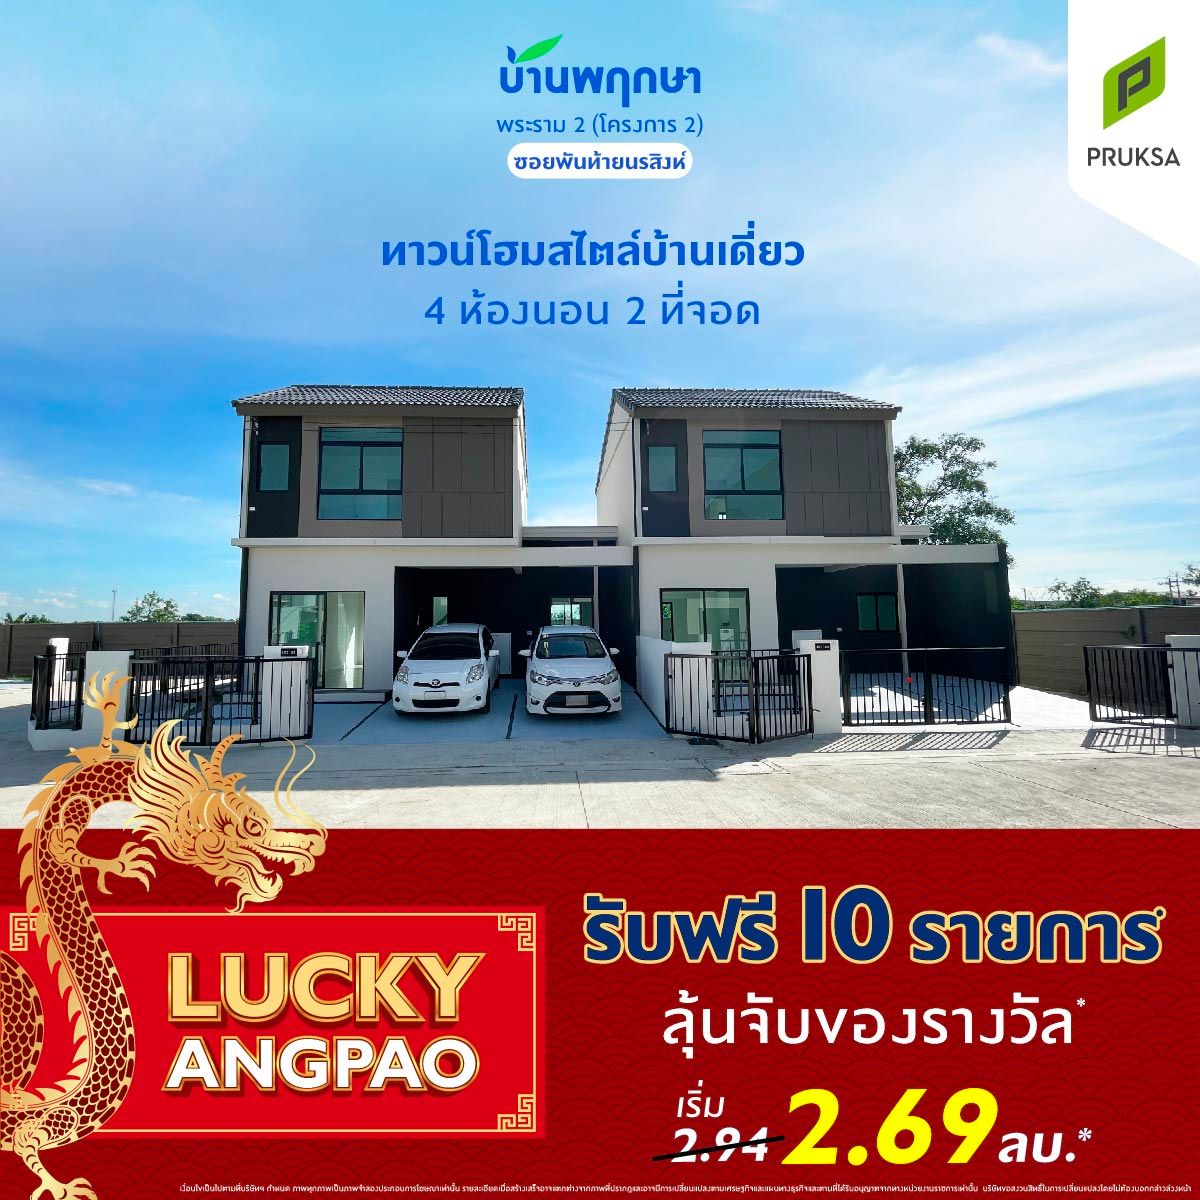 24 Feb FB Lucky Angpao NW PK1352